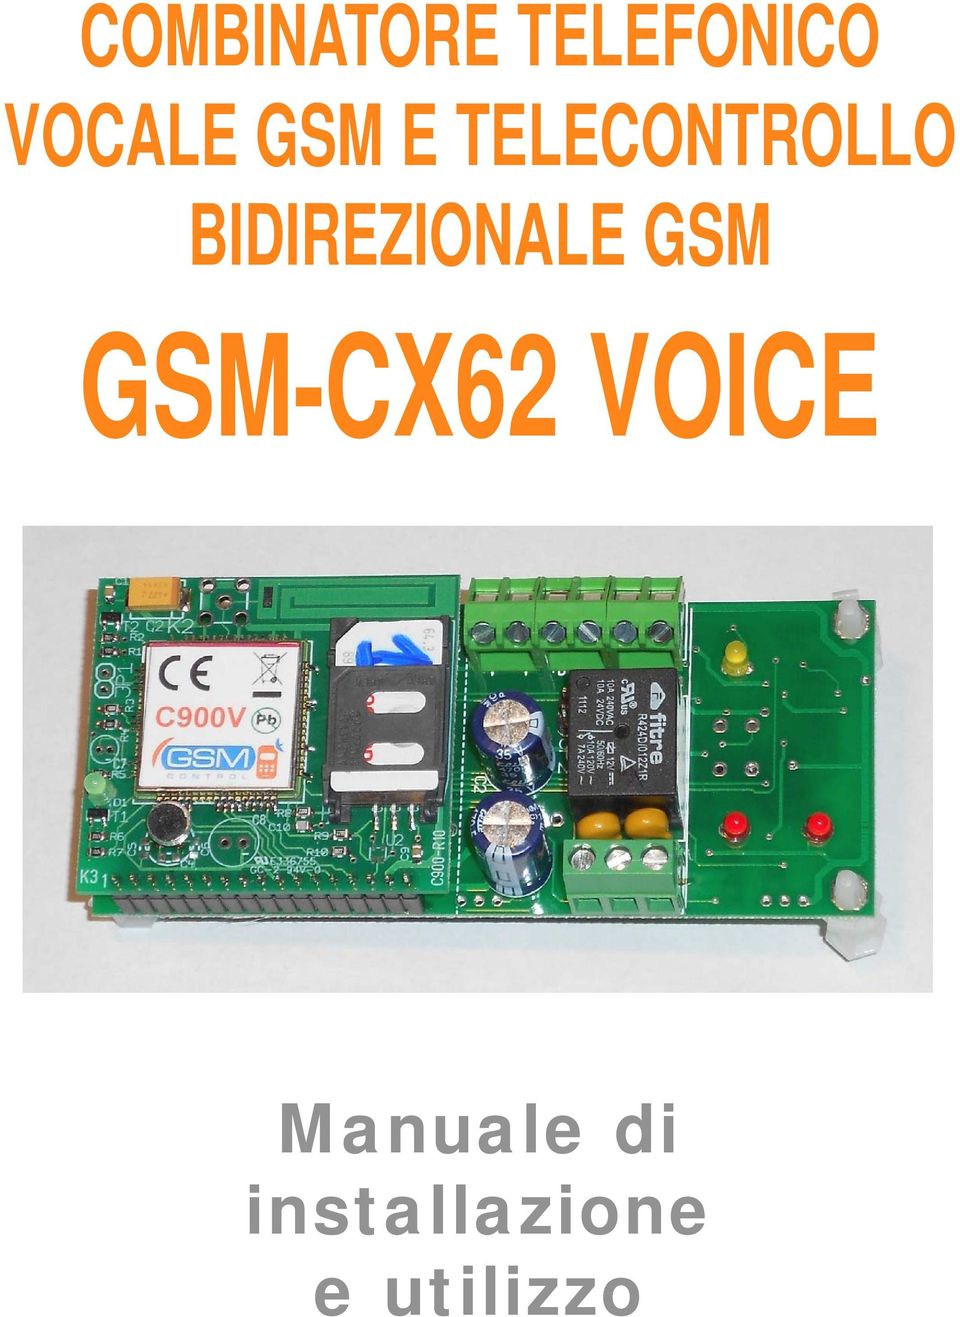 BIDIREZIONALE GSM GSM-CX62